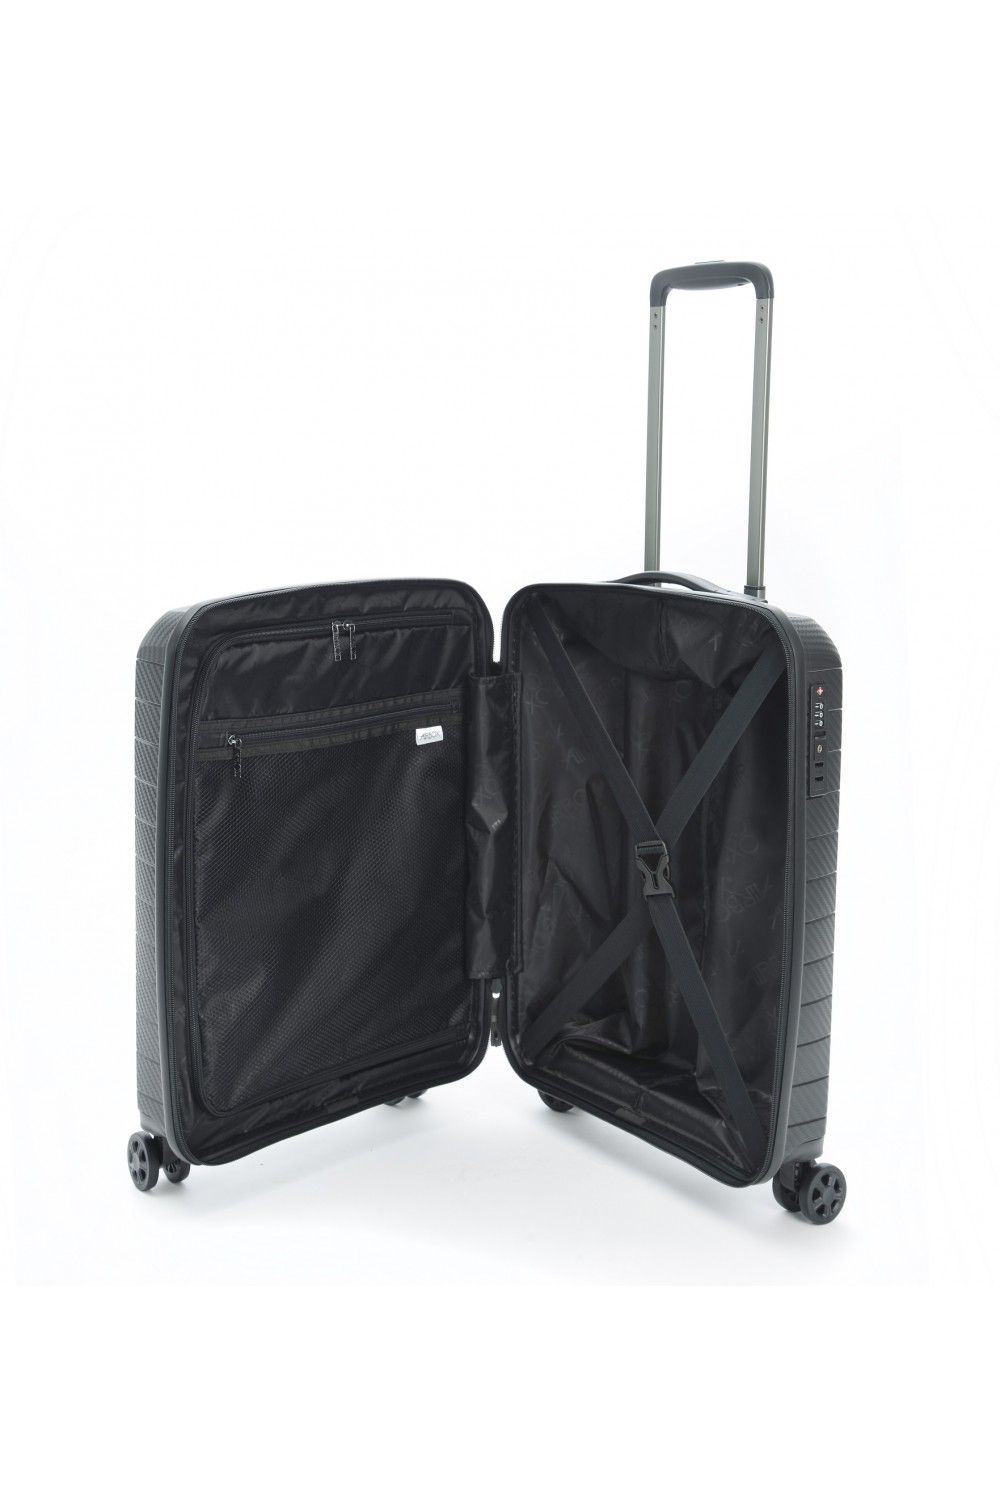 Hand luggage suitcase AIRBOX AZ18 55cm 4 wheels black